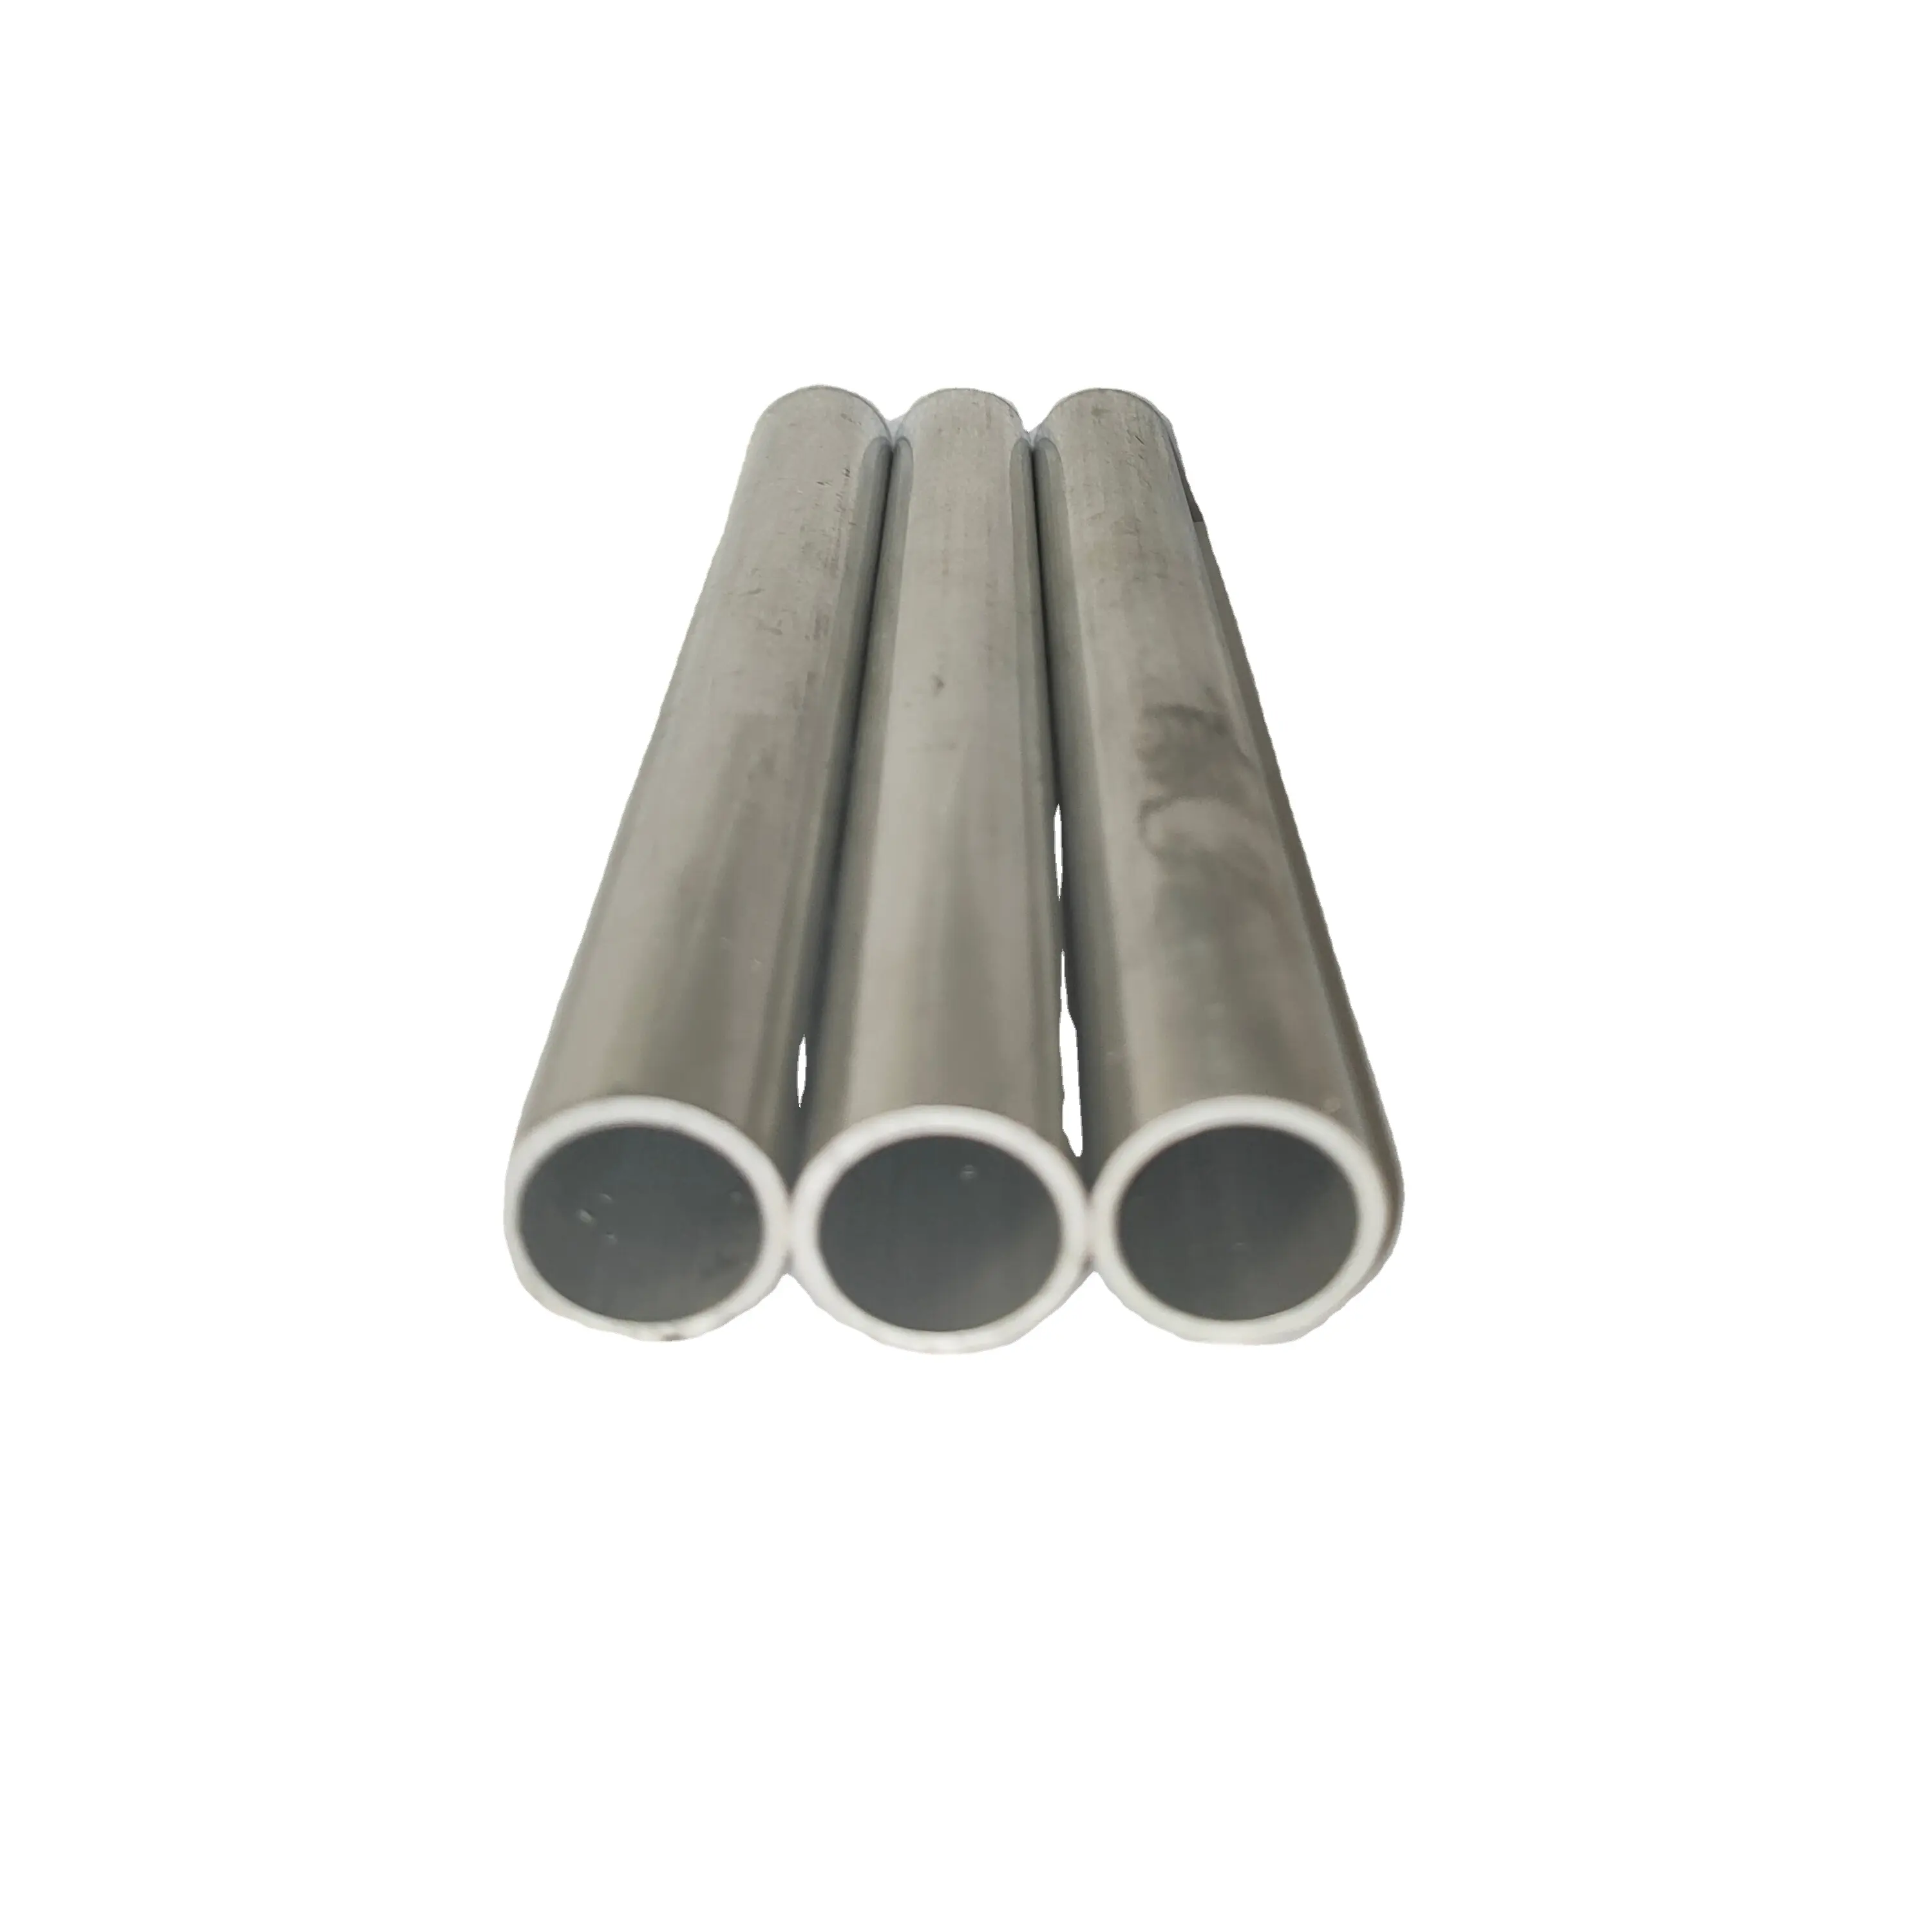 Tabung aluminium 6061 anodized diameter luar 7 mm